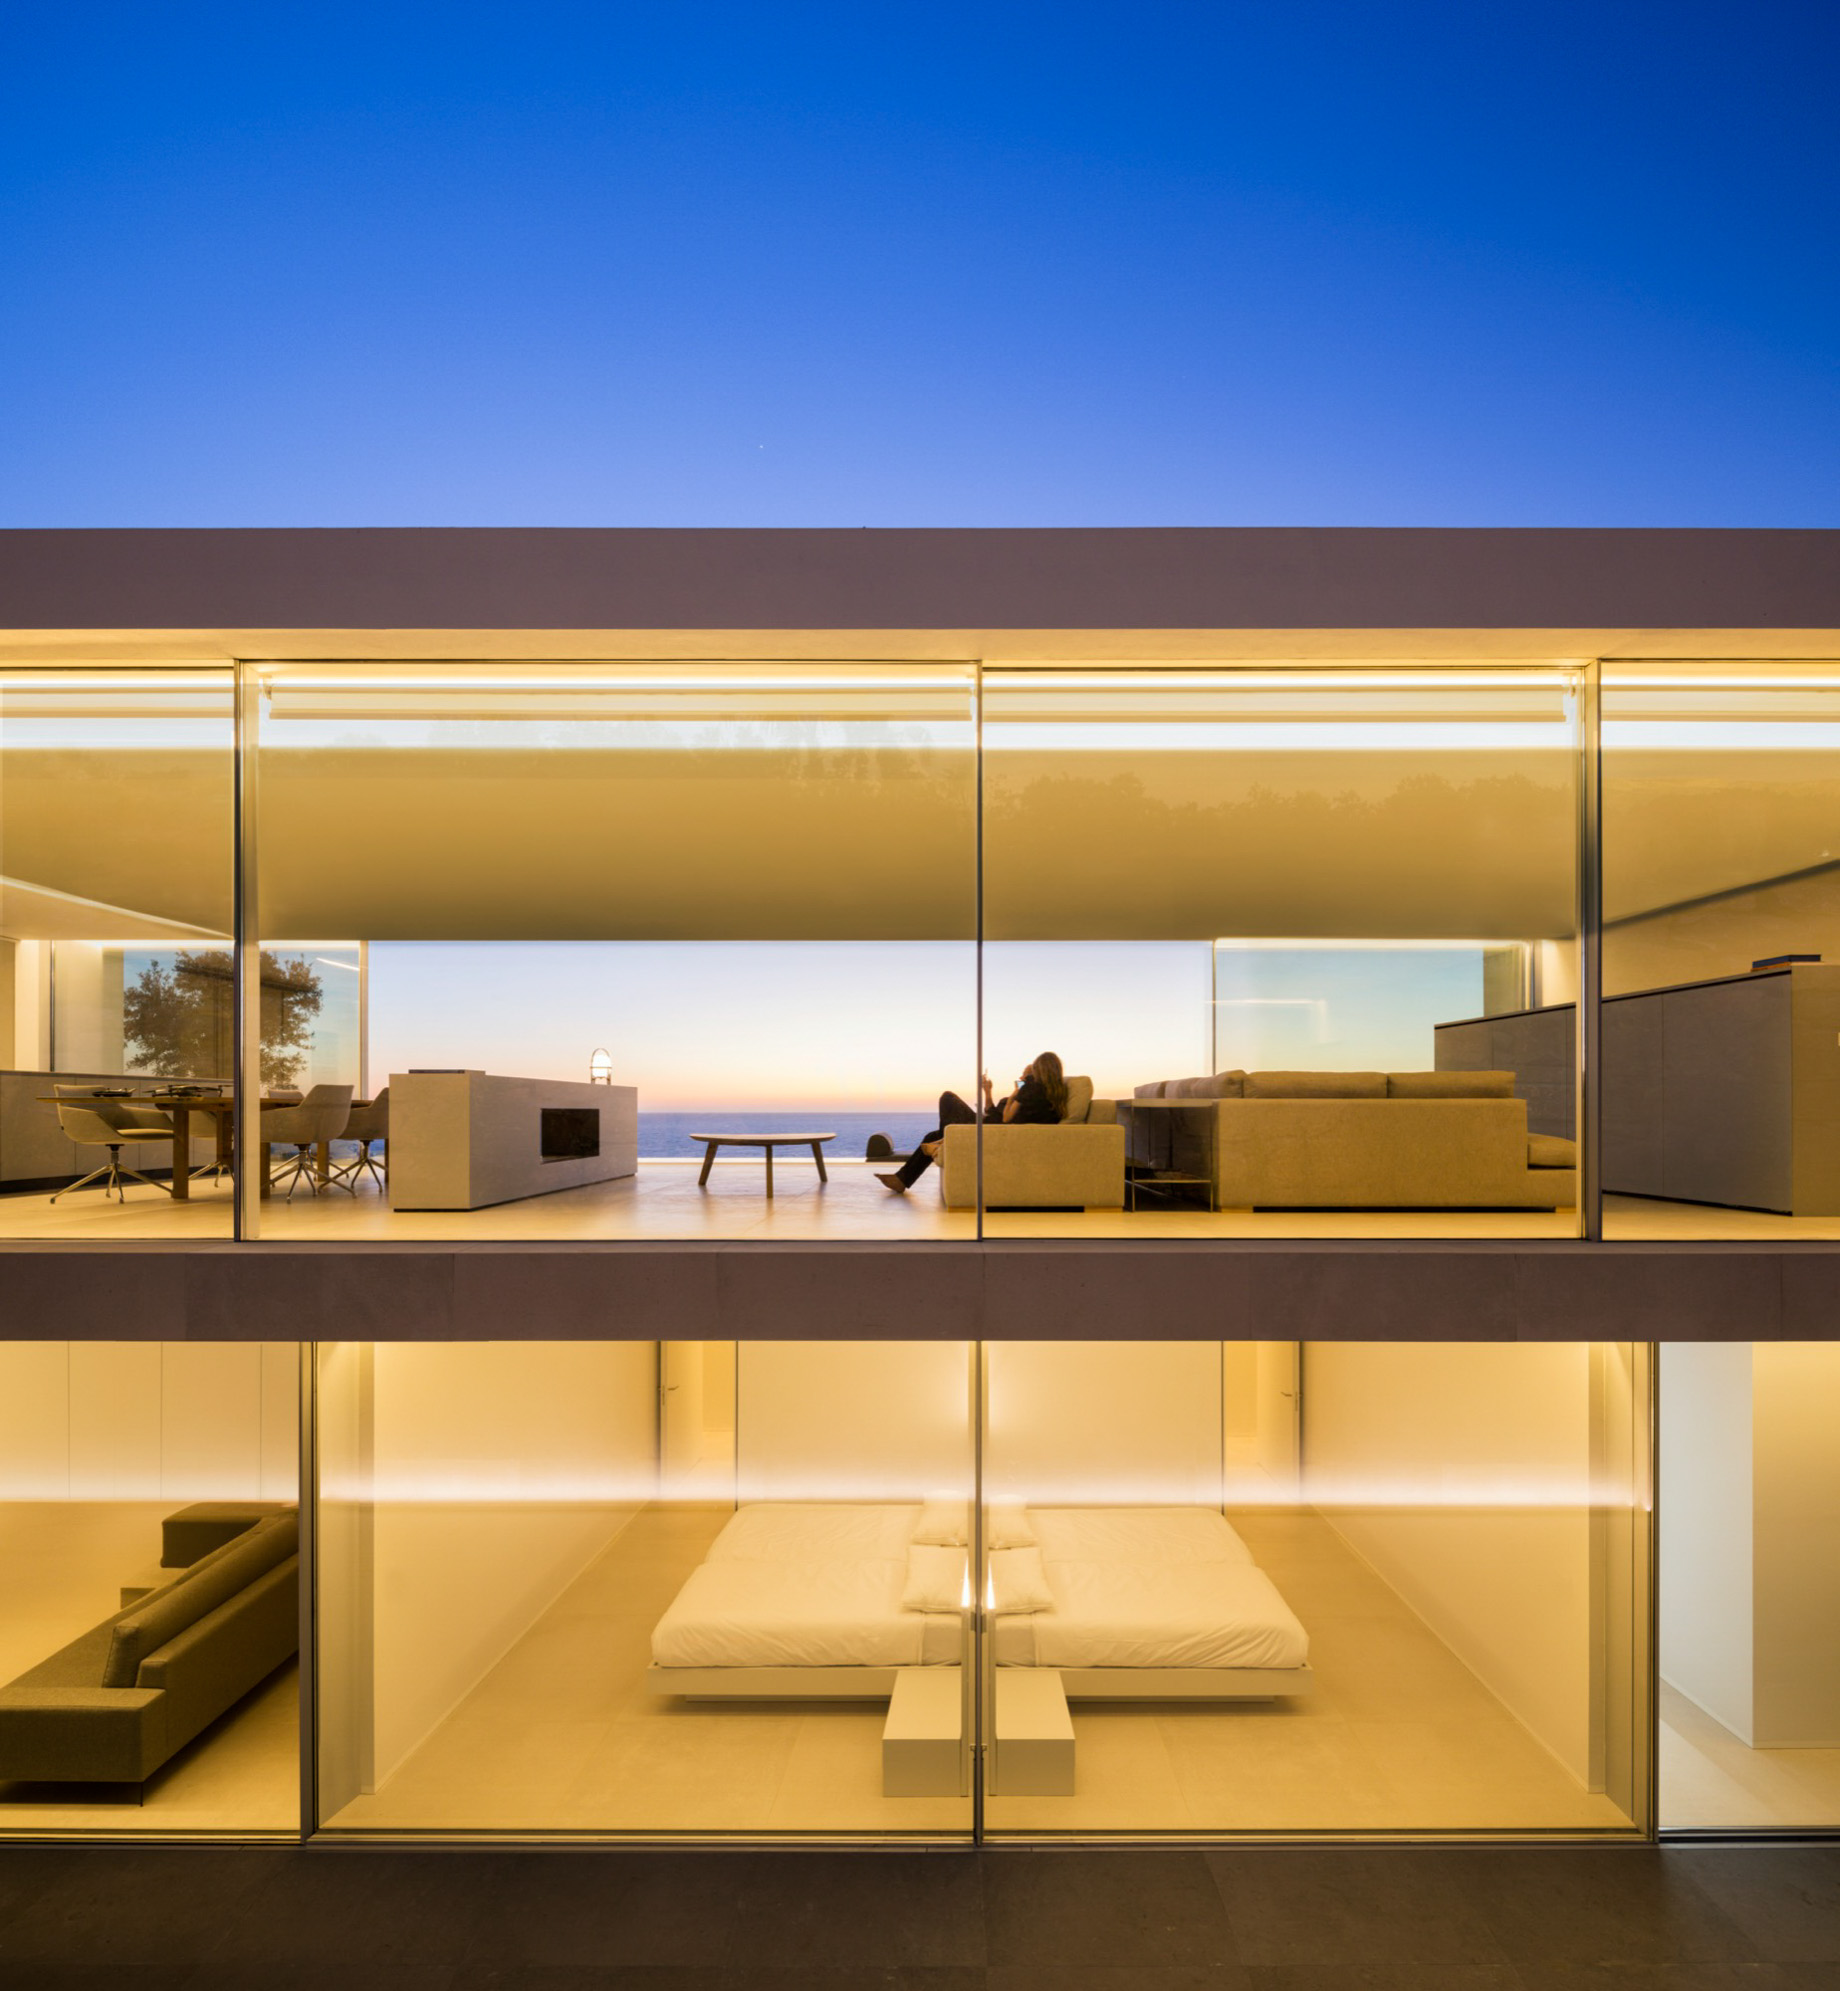 House on the Air Modern Contemporary Villa – Zahara de los Atunes, Spain – 62